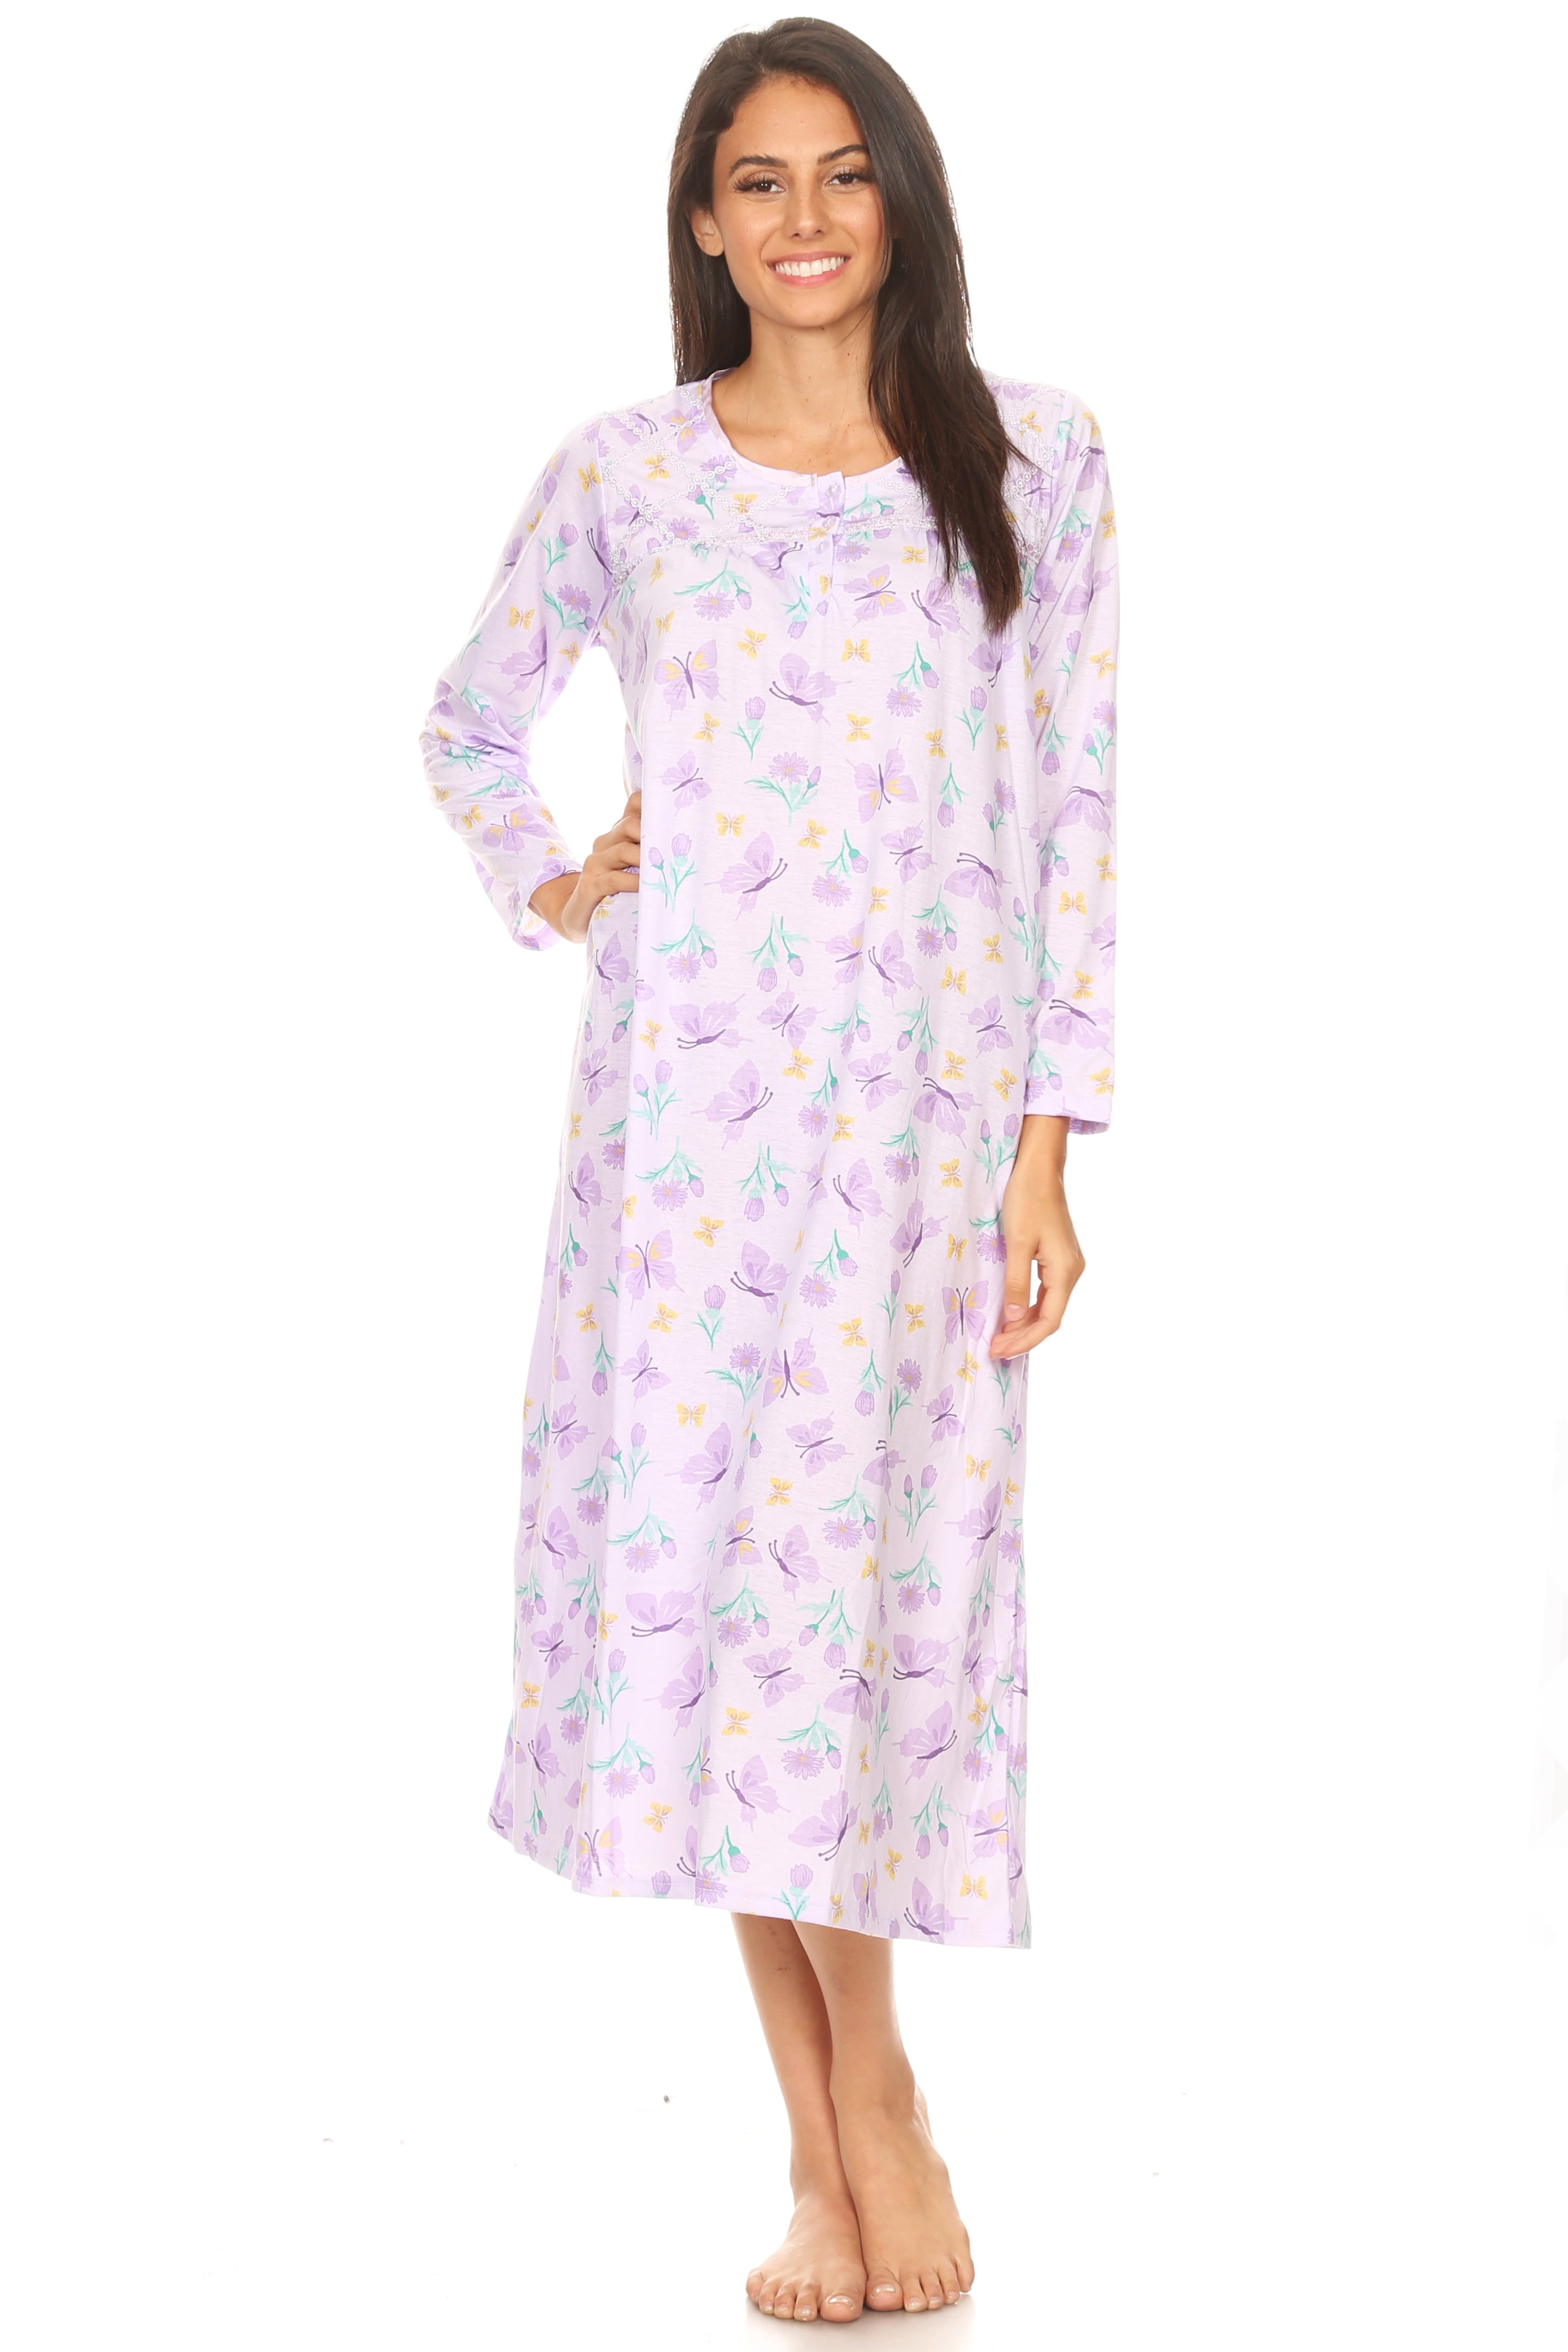 670 Womens Nightgown Sleepwear Pajamas Woman Long Sleeve Sleep Dress ...